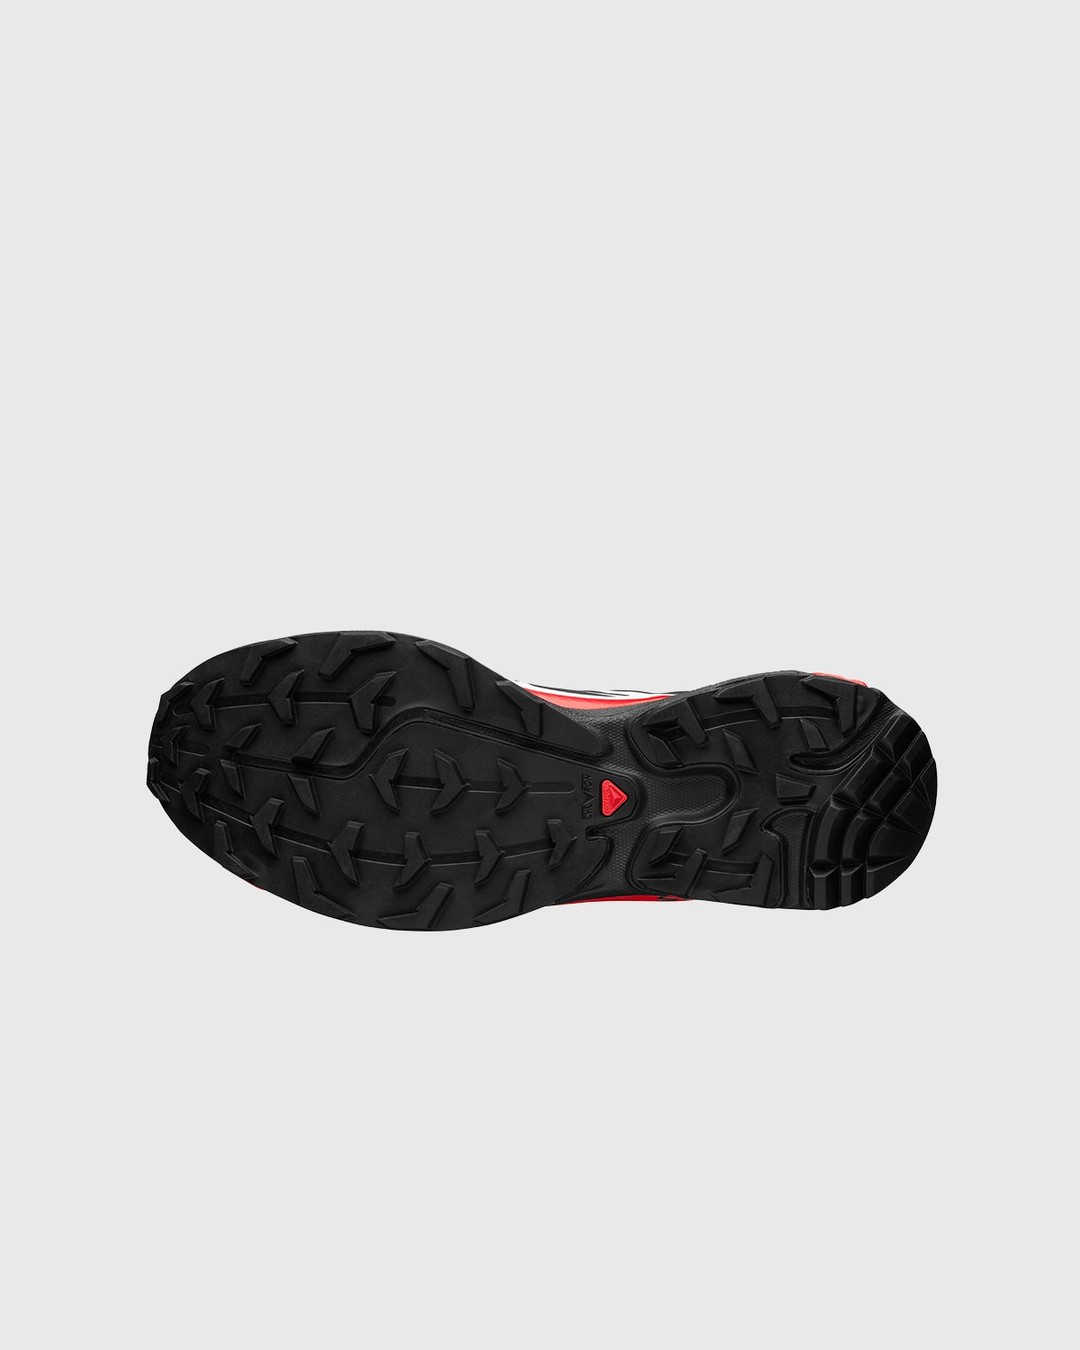 Salomon – XT-6 ADVANCED Black/ Racing Red/ White - Low Top Sneakers - Black - Image 5